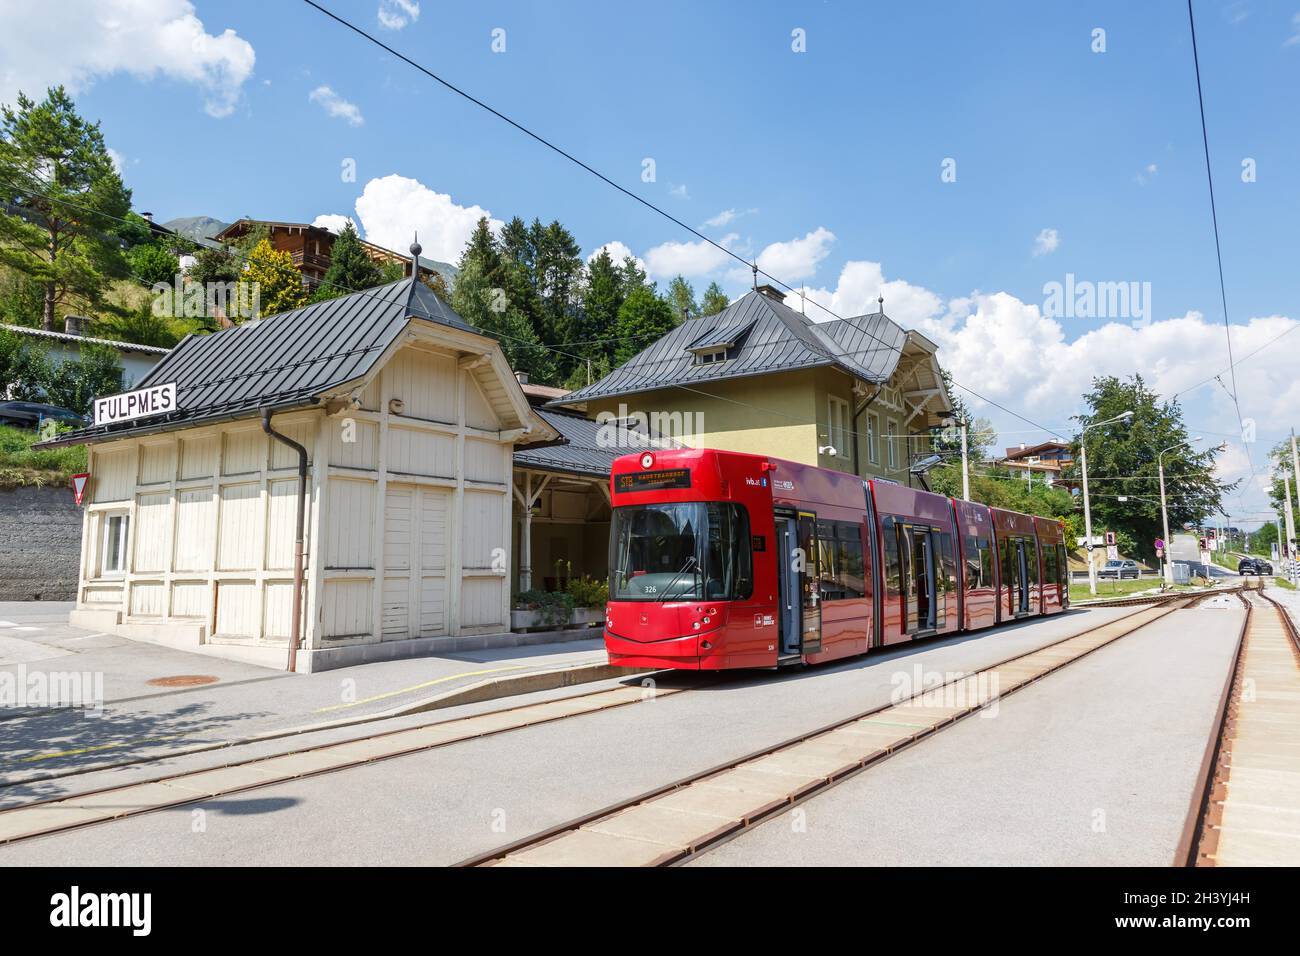 Stubaitalbahn Innsbruck tram Bombardier tramway local traffic stop Fulpmes in Austria Stock Photo